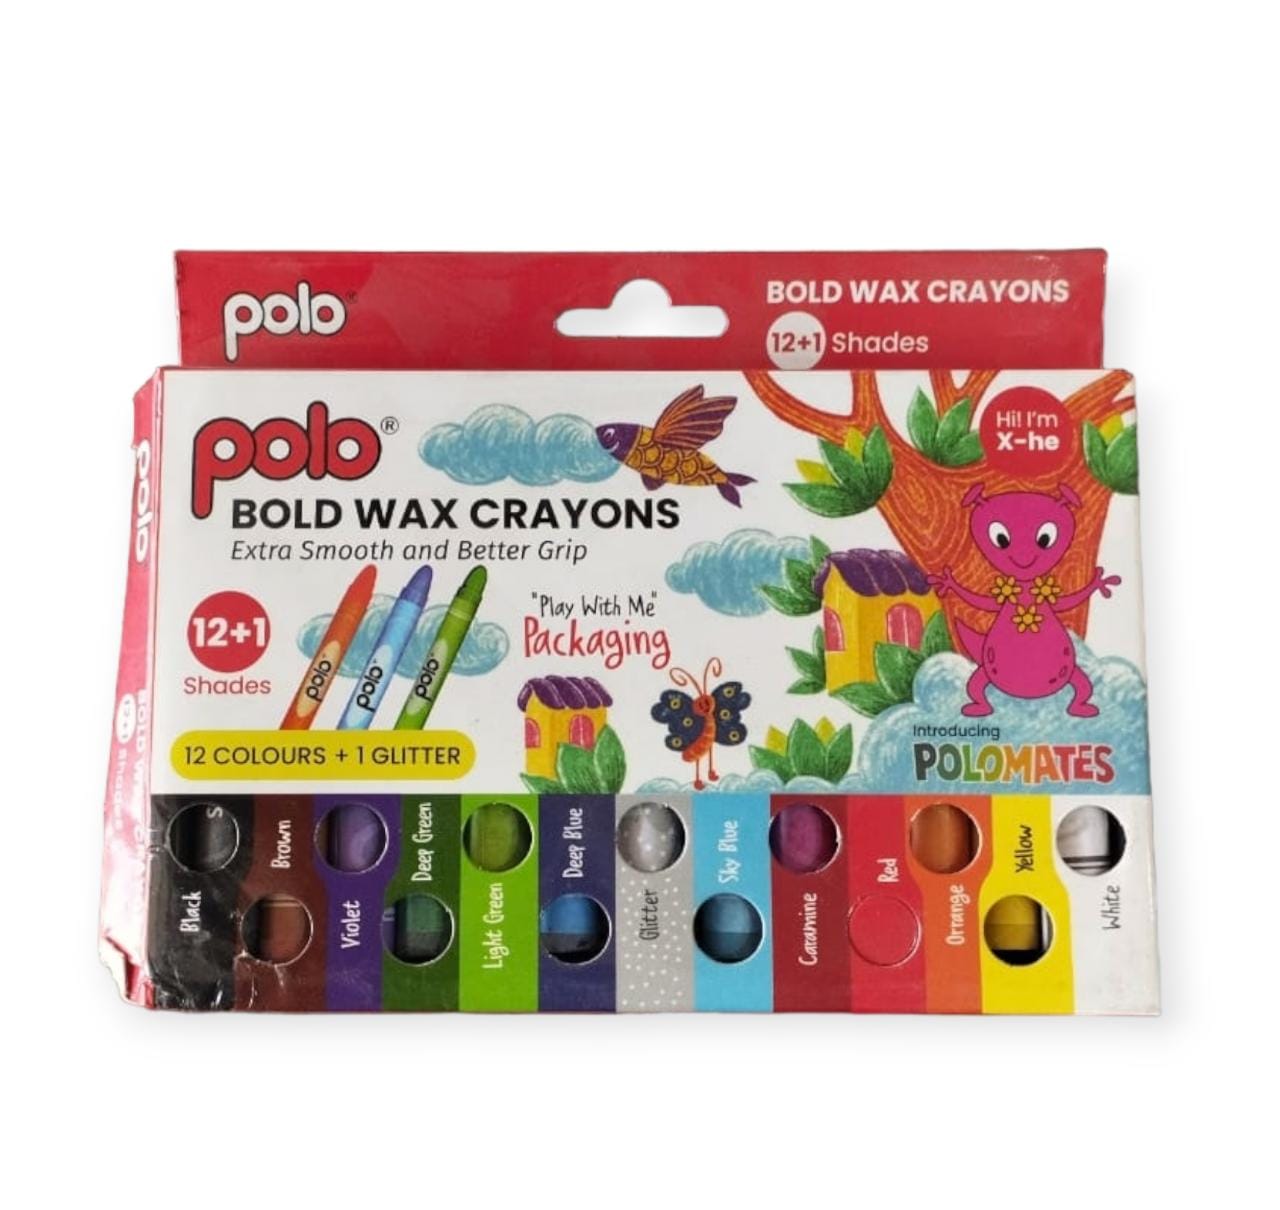 Polo bold wax crayons 